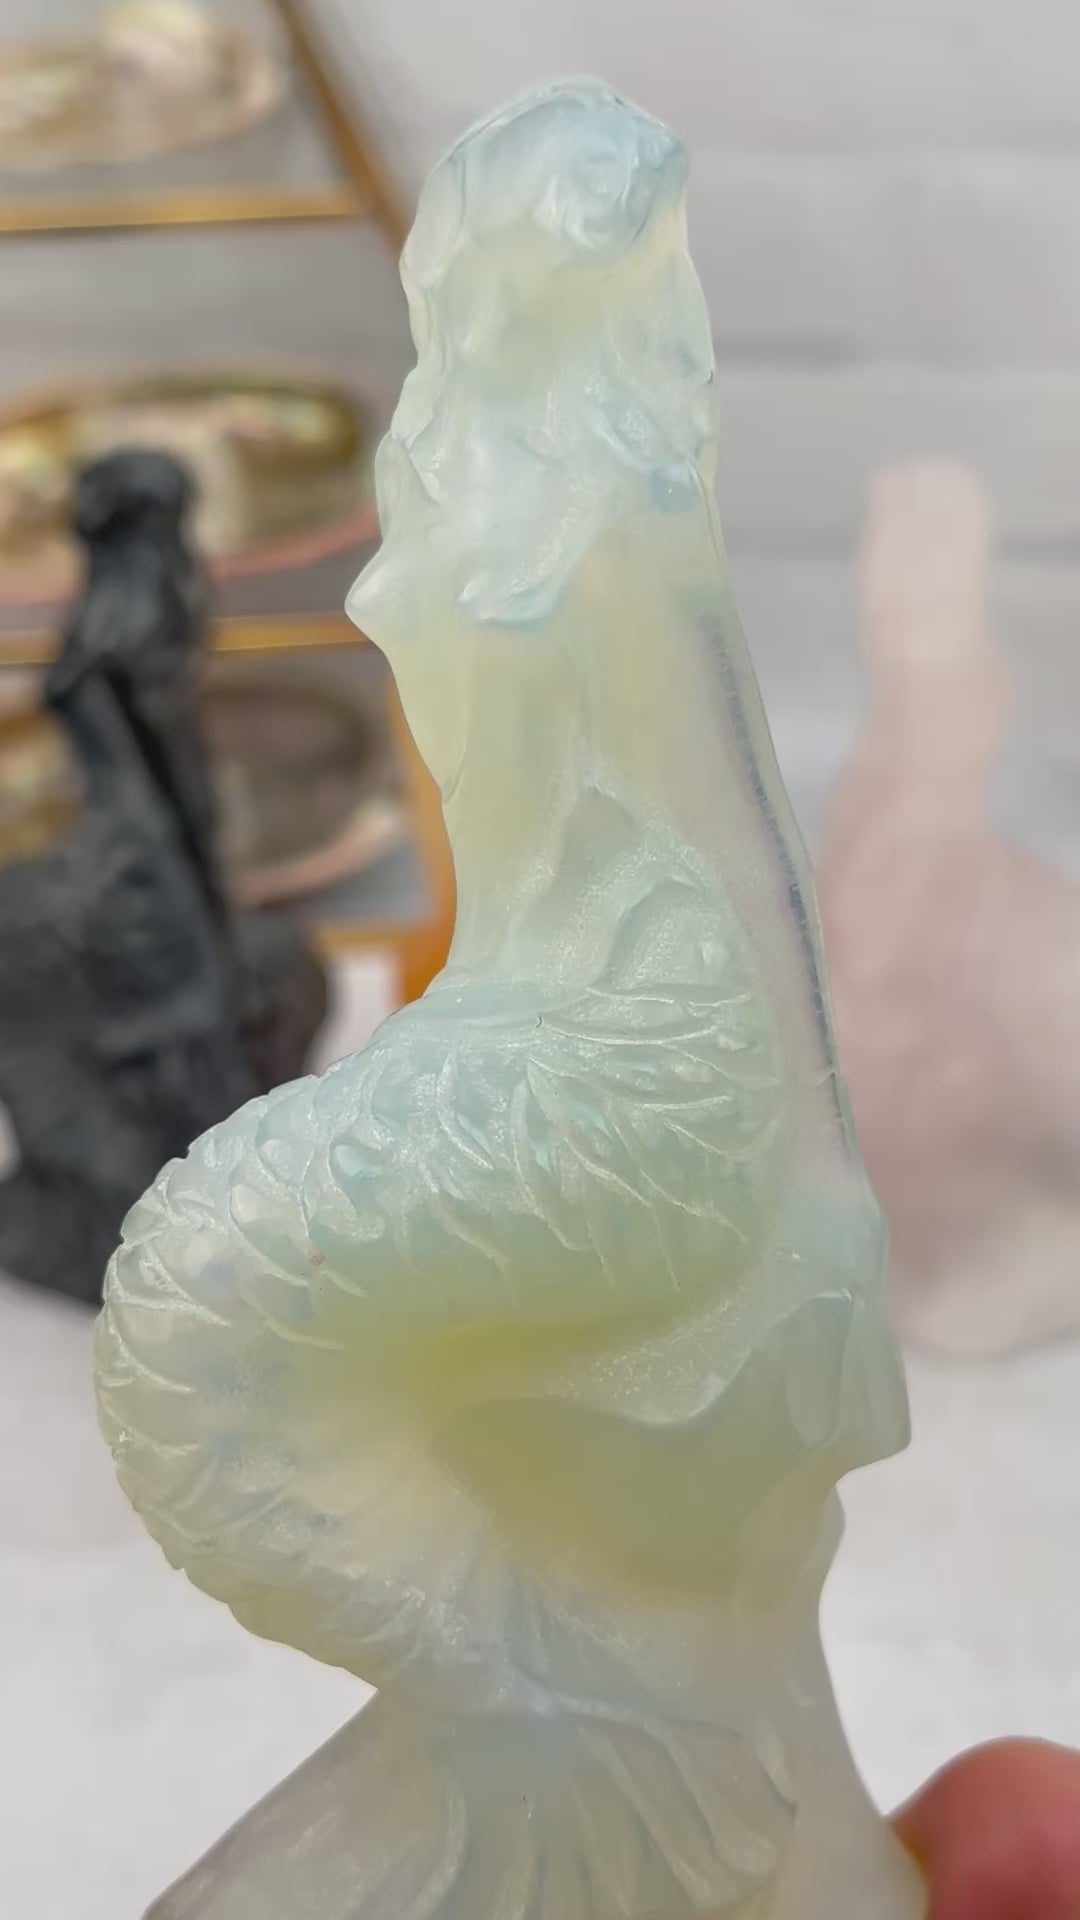 Crystal Mermaid - You Select Stone - Crystal Carving